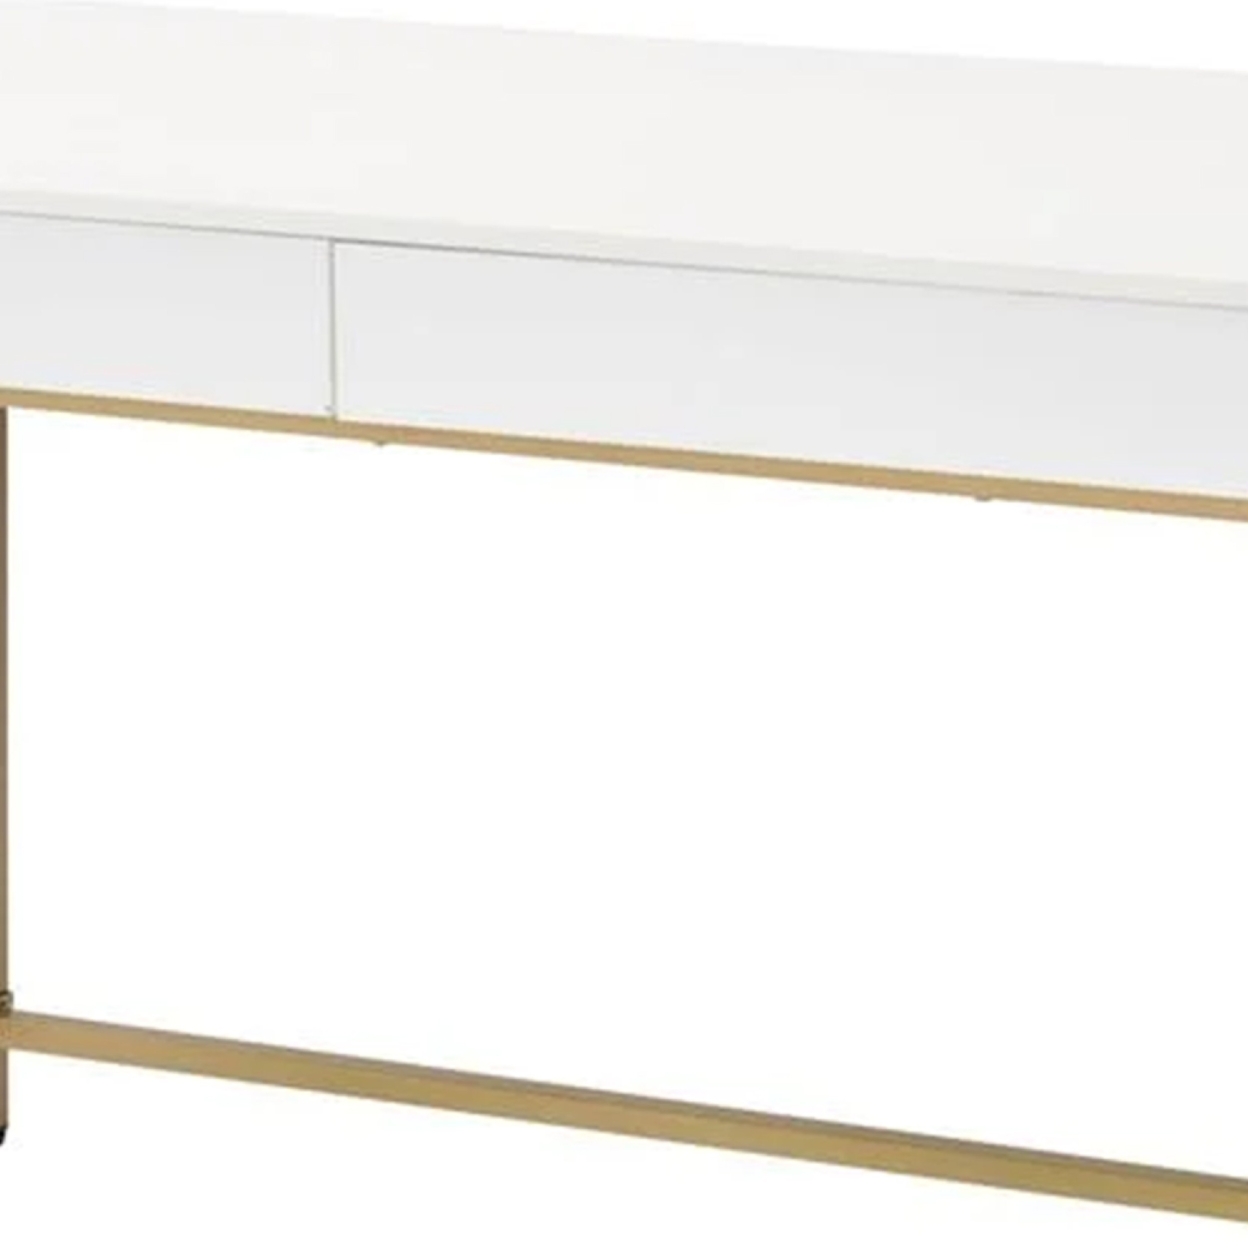 50 Inch Desk Console Table, 2 Drawers, Metal Inverted U Frame, White, Gold- Saltoro Sherpi